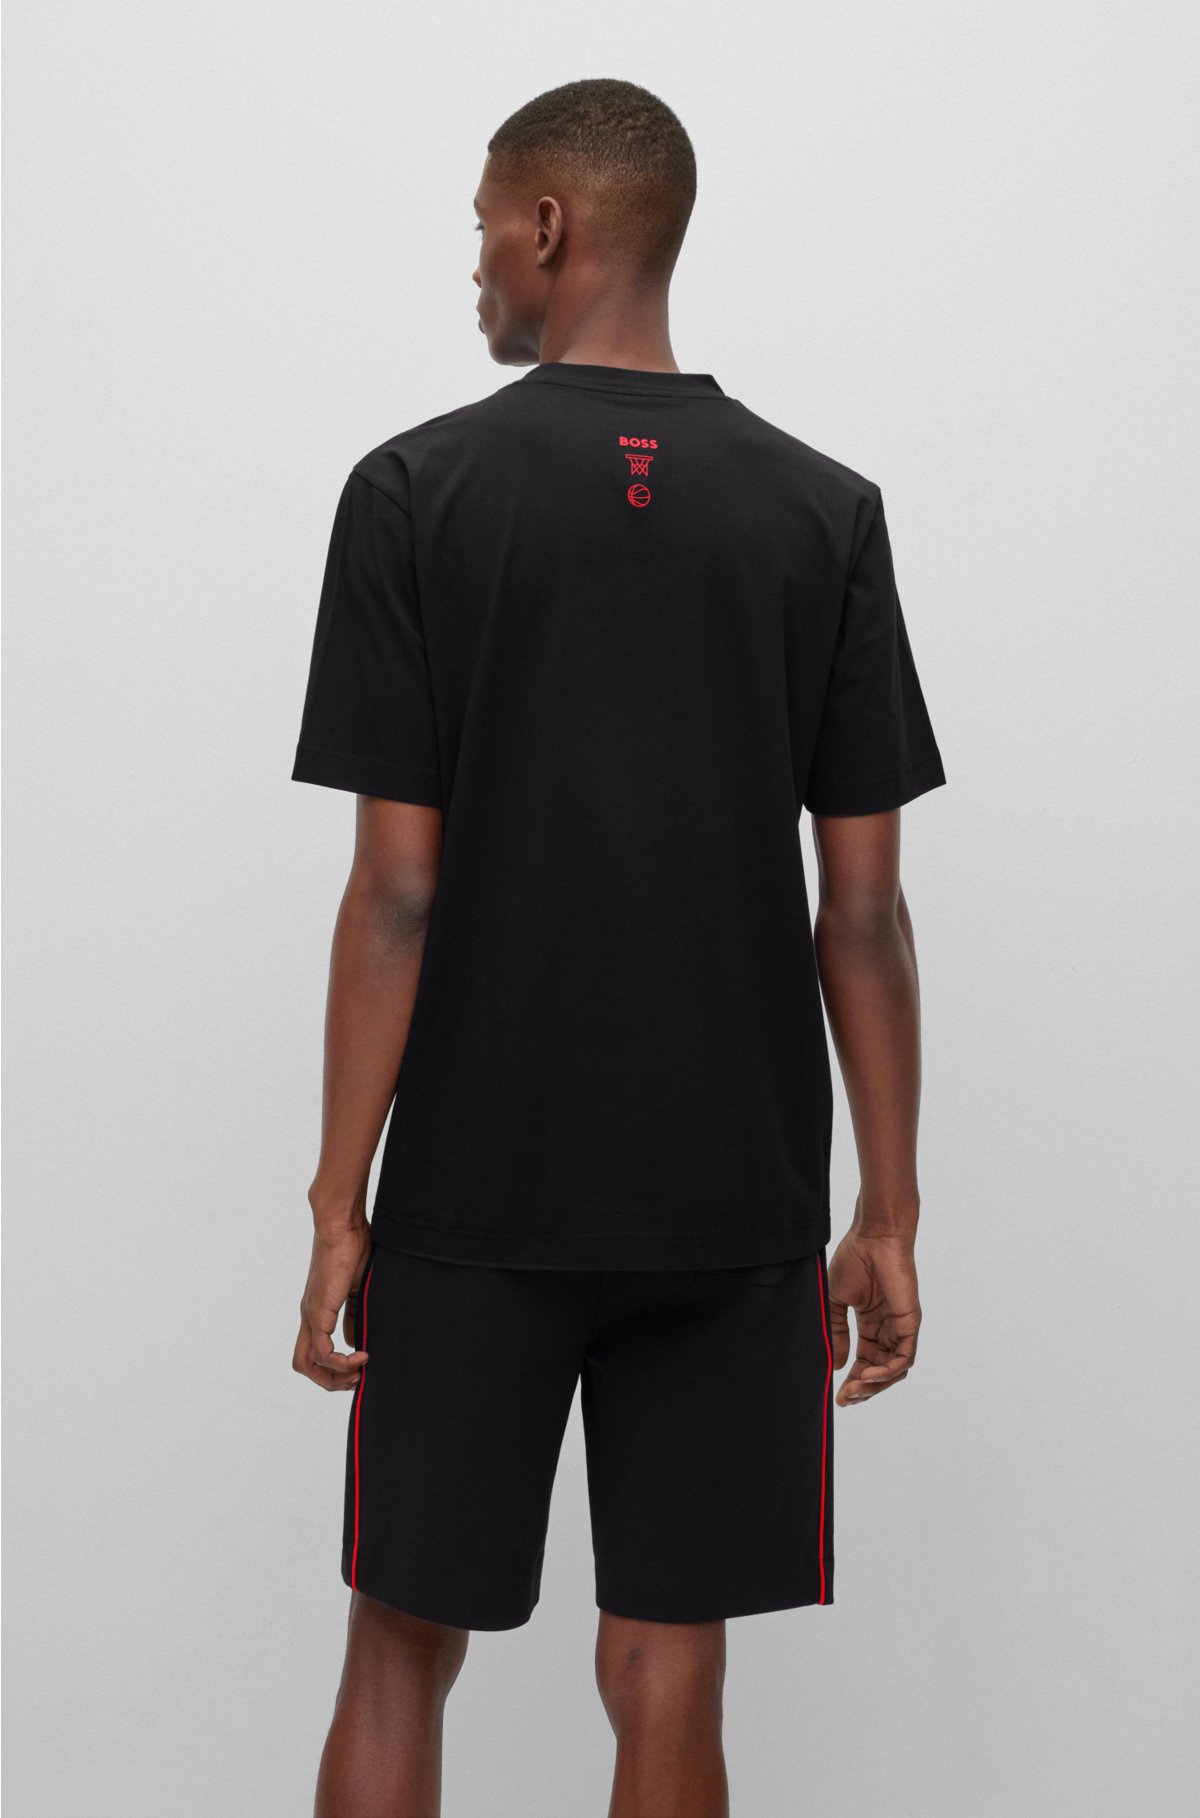 Chicago Bulls Shirt Small Black NBA Nike Dri Fit Practice Legend